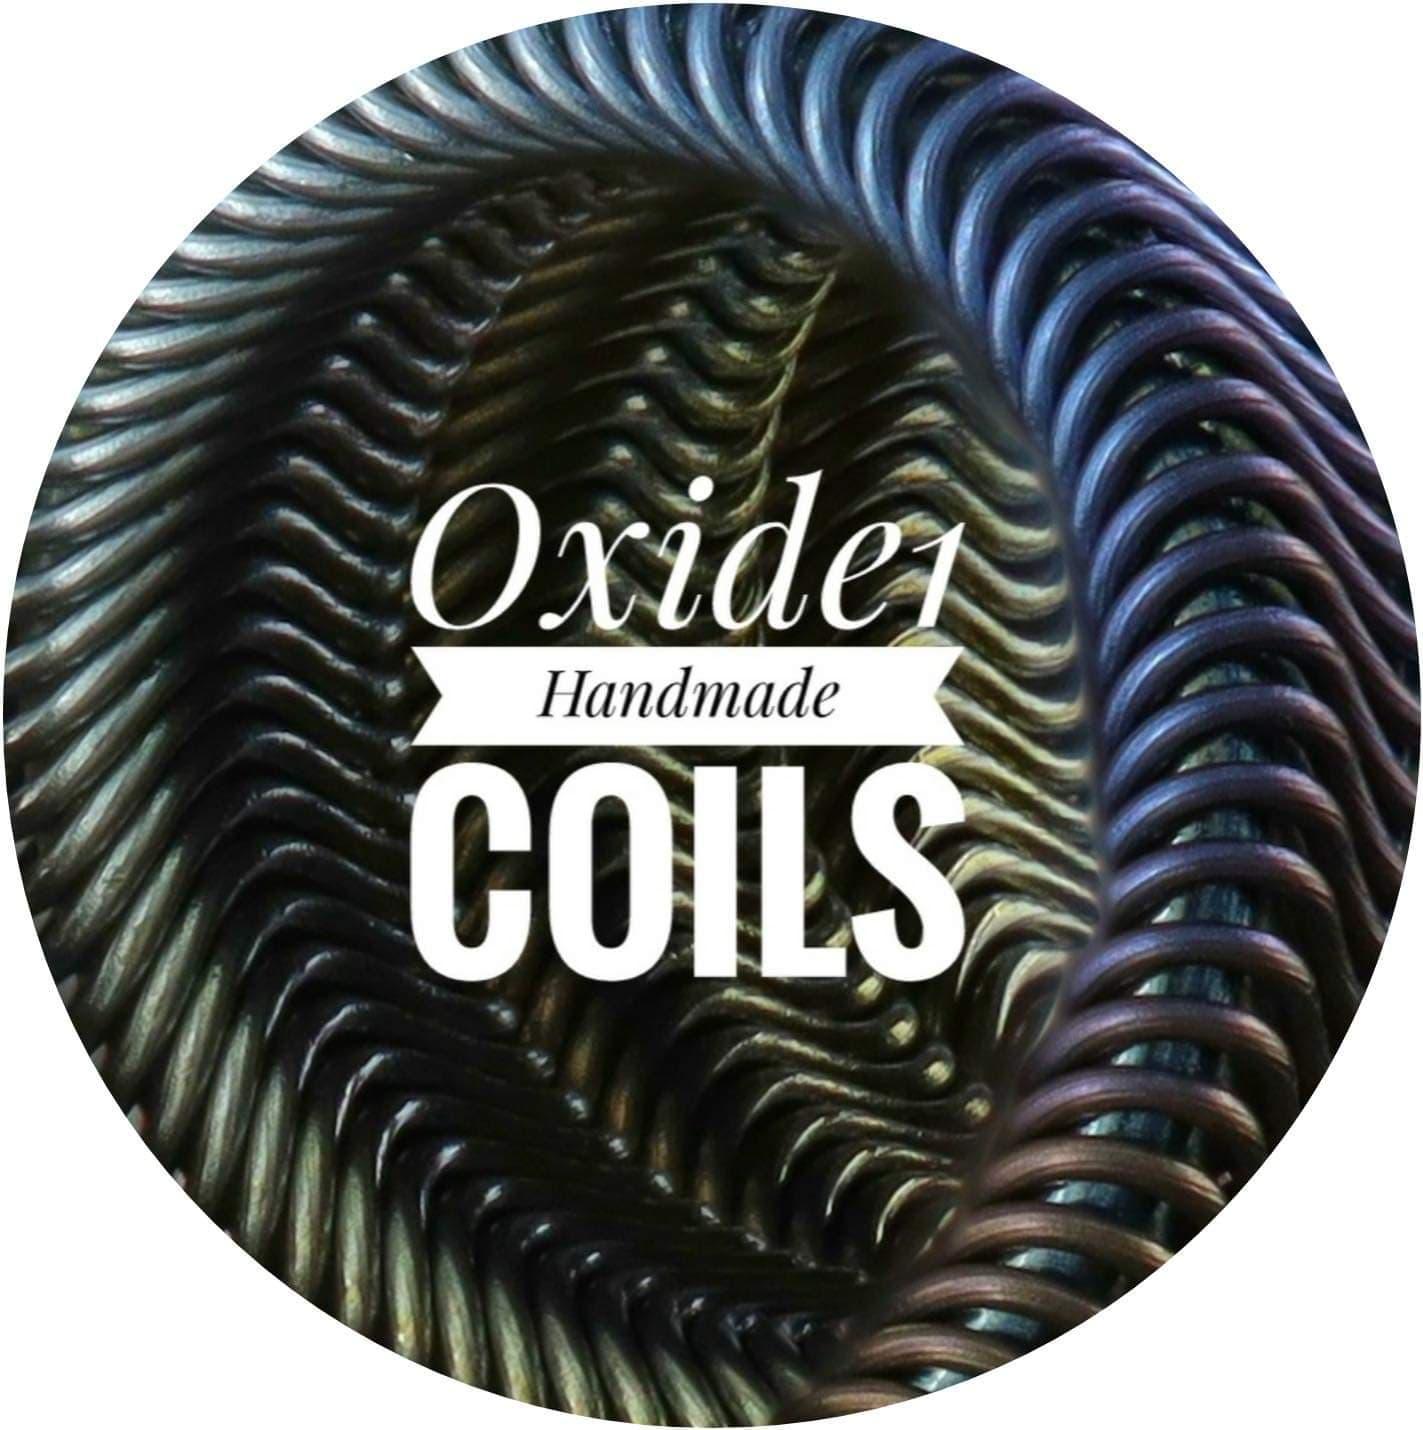 Oxide1 - Advanced Mixed Wire Coils, [product_vandor]